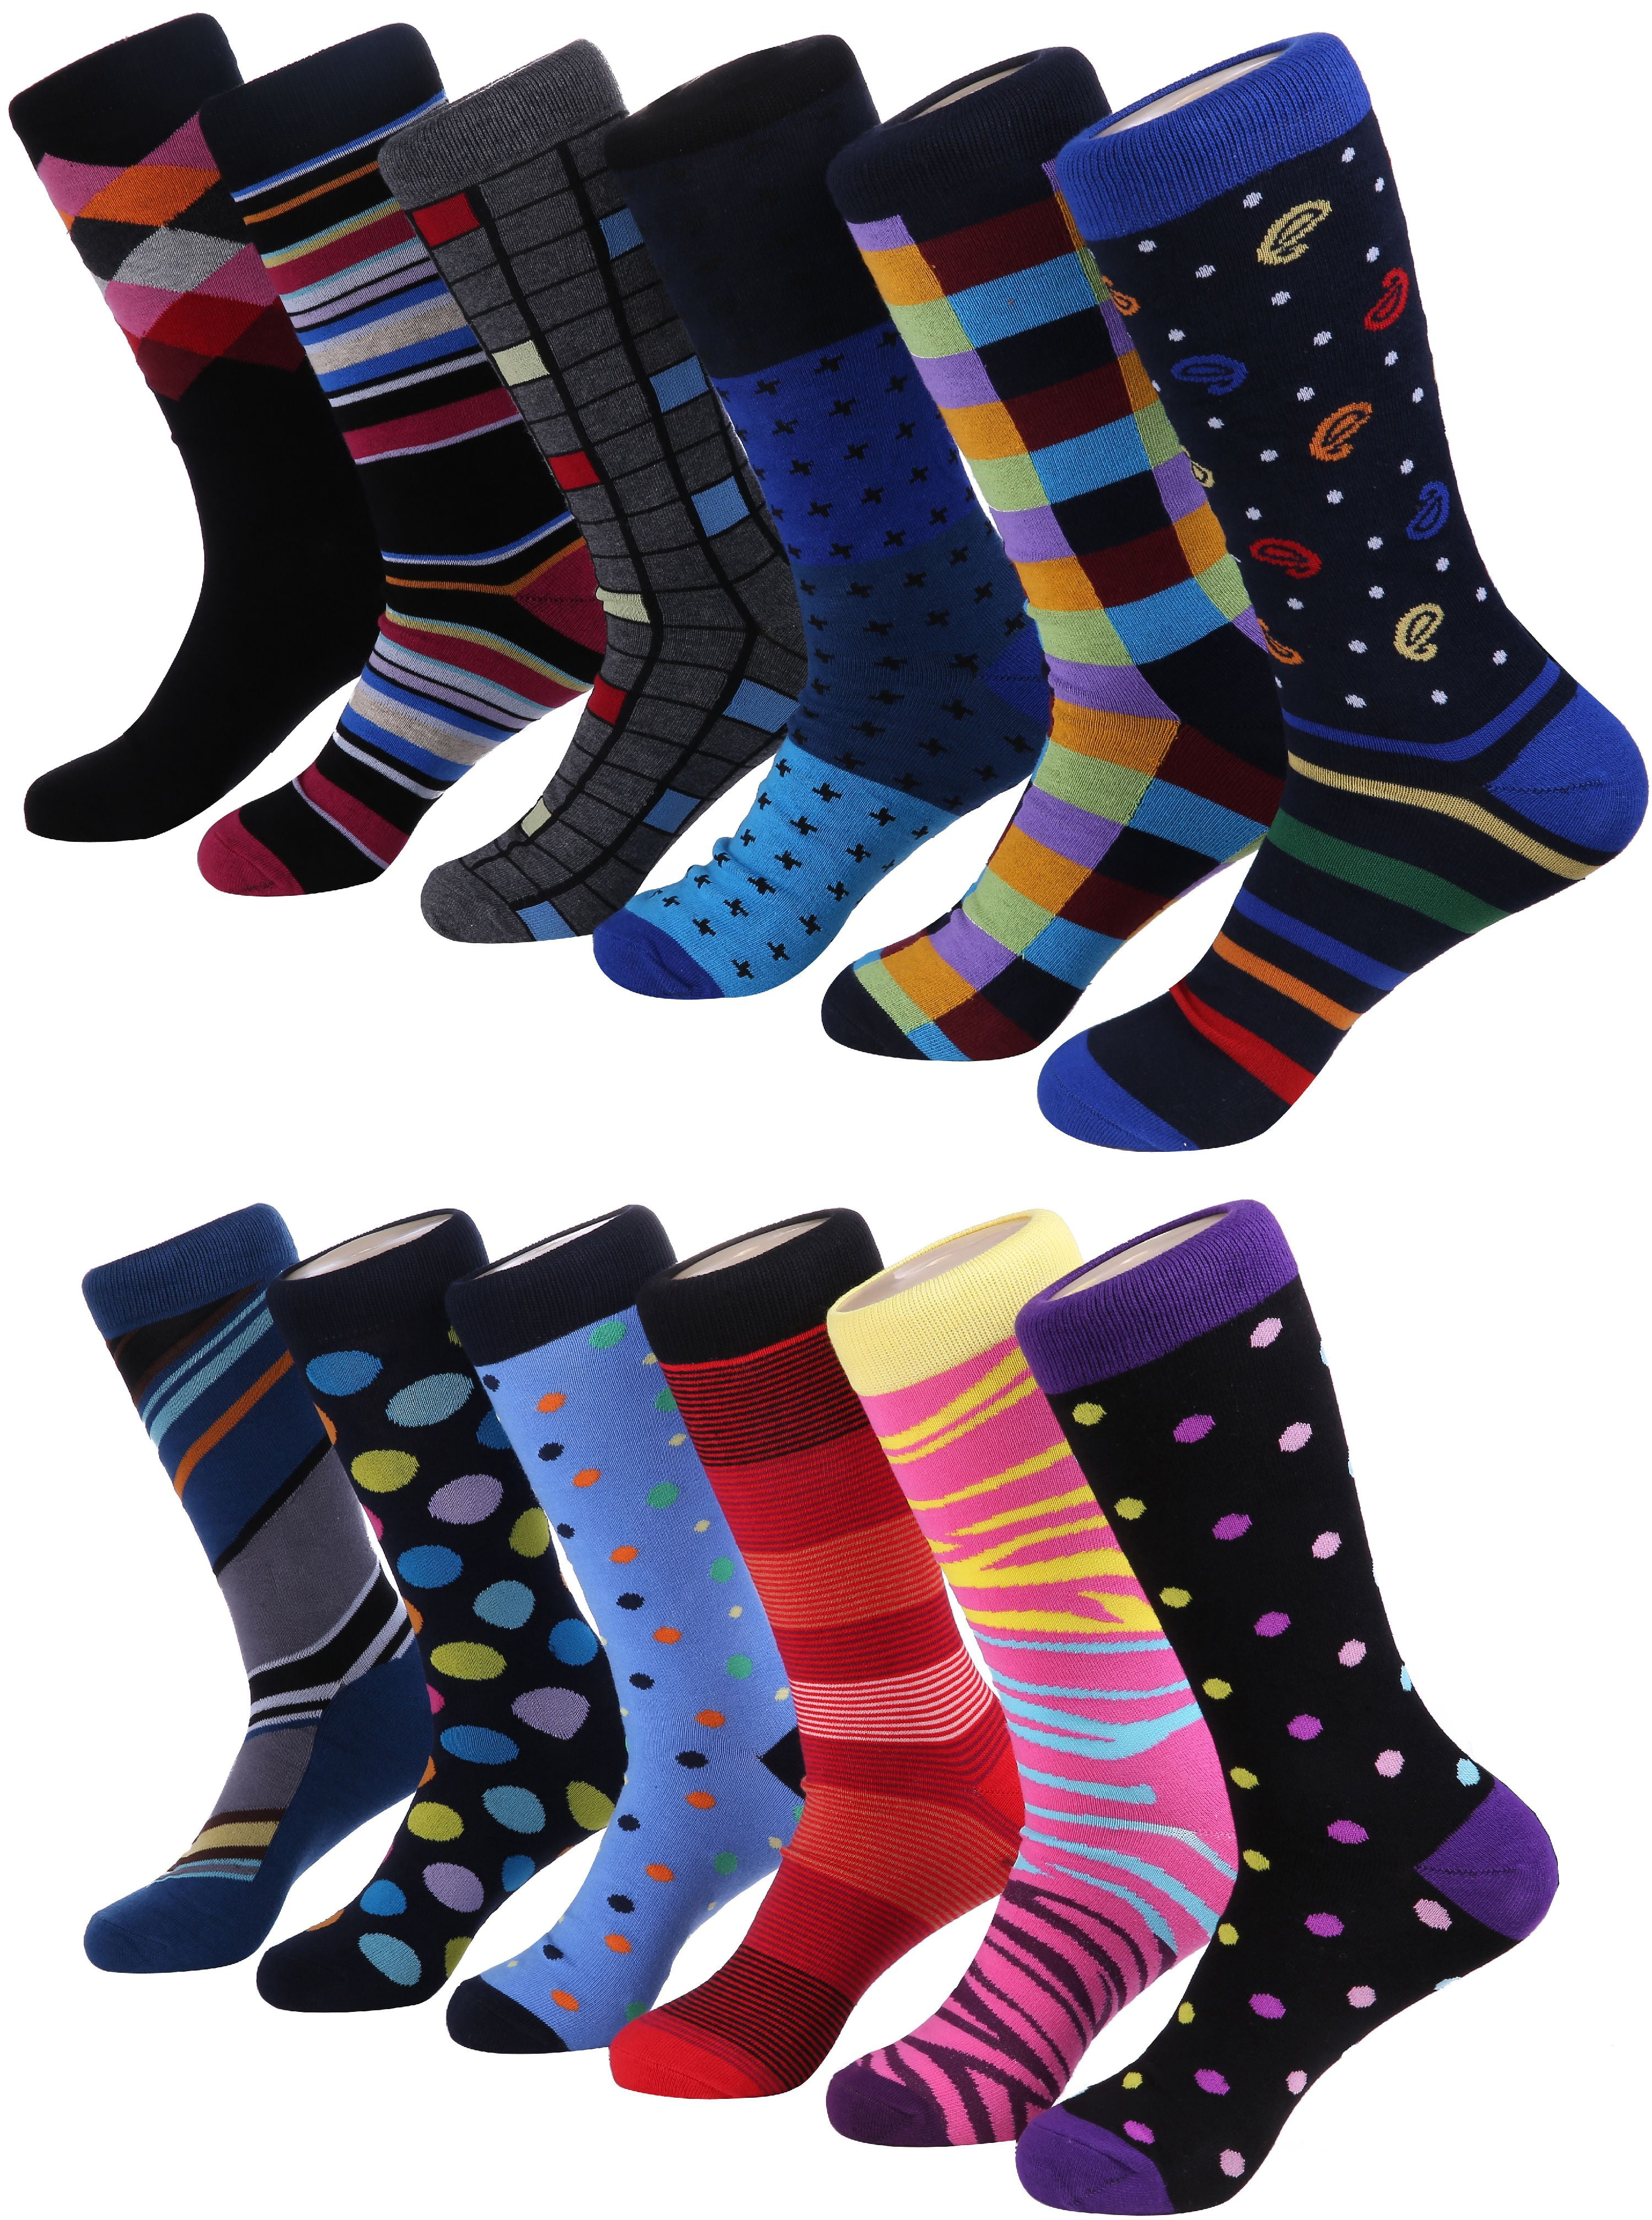 Mio Marino - Mio Marino Men's Fun Dress Socks - Colorful Funky Socks ...